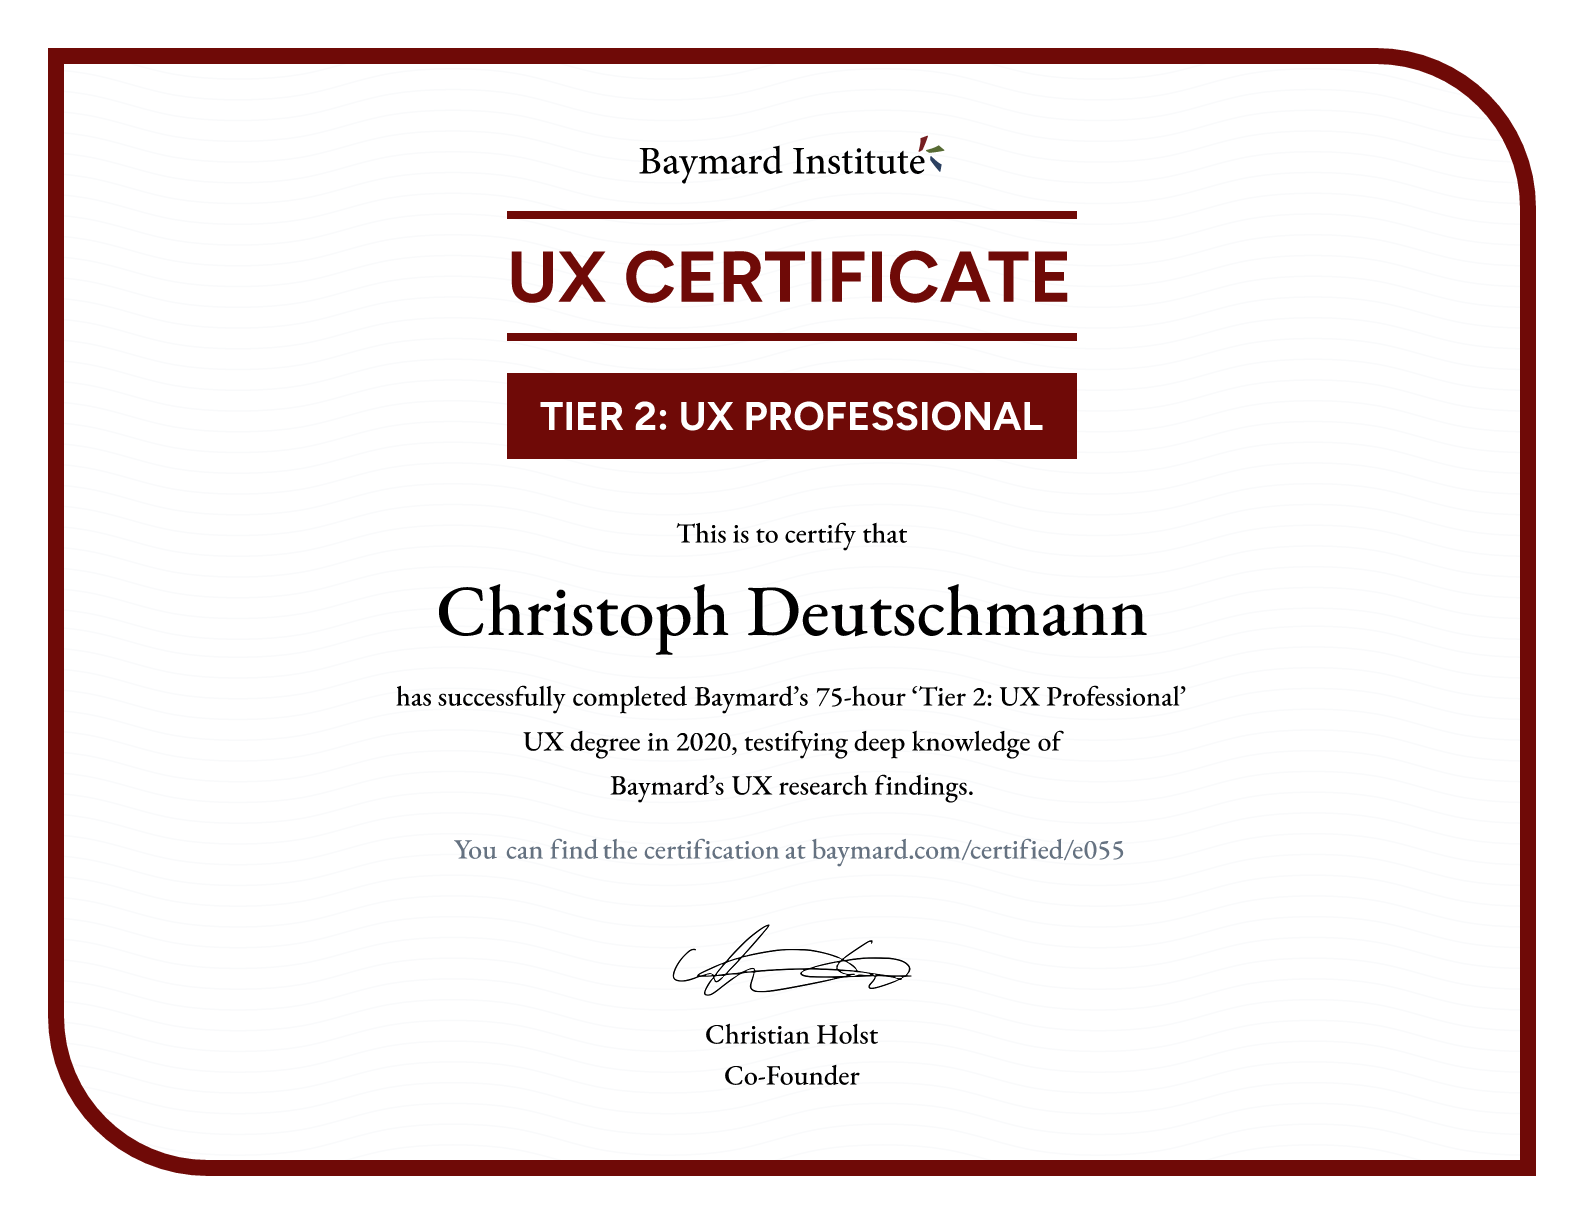 Christoph Deutschmann’s certificate